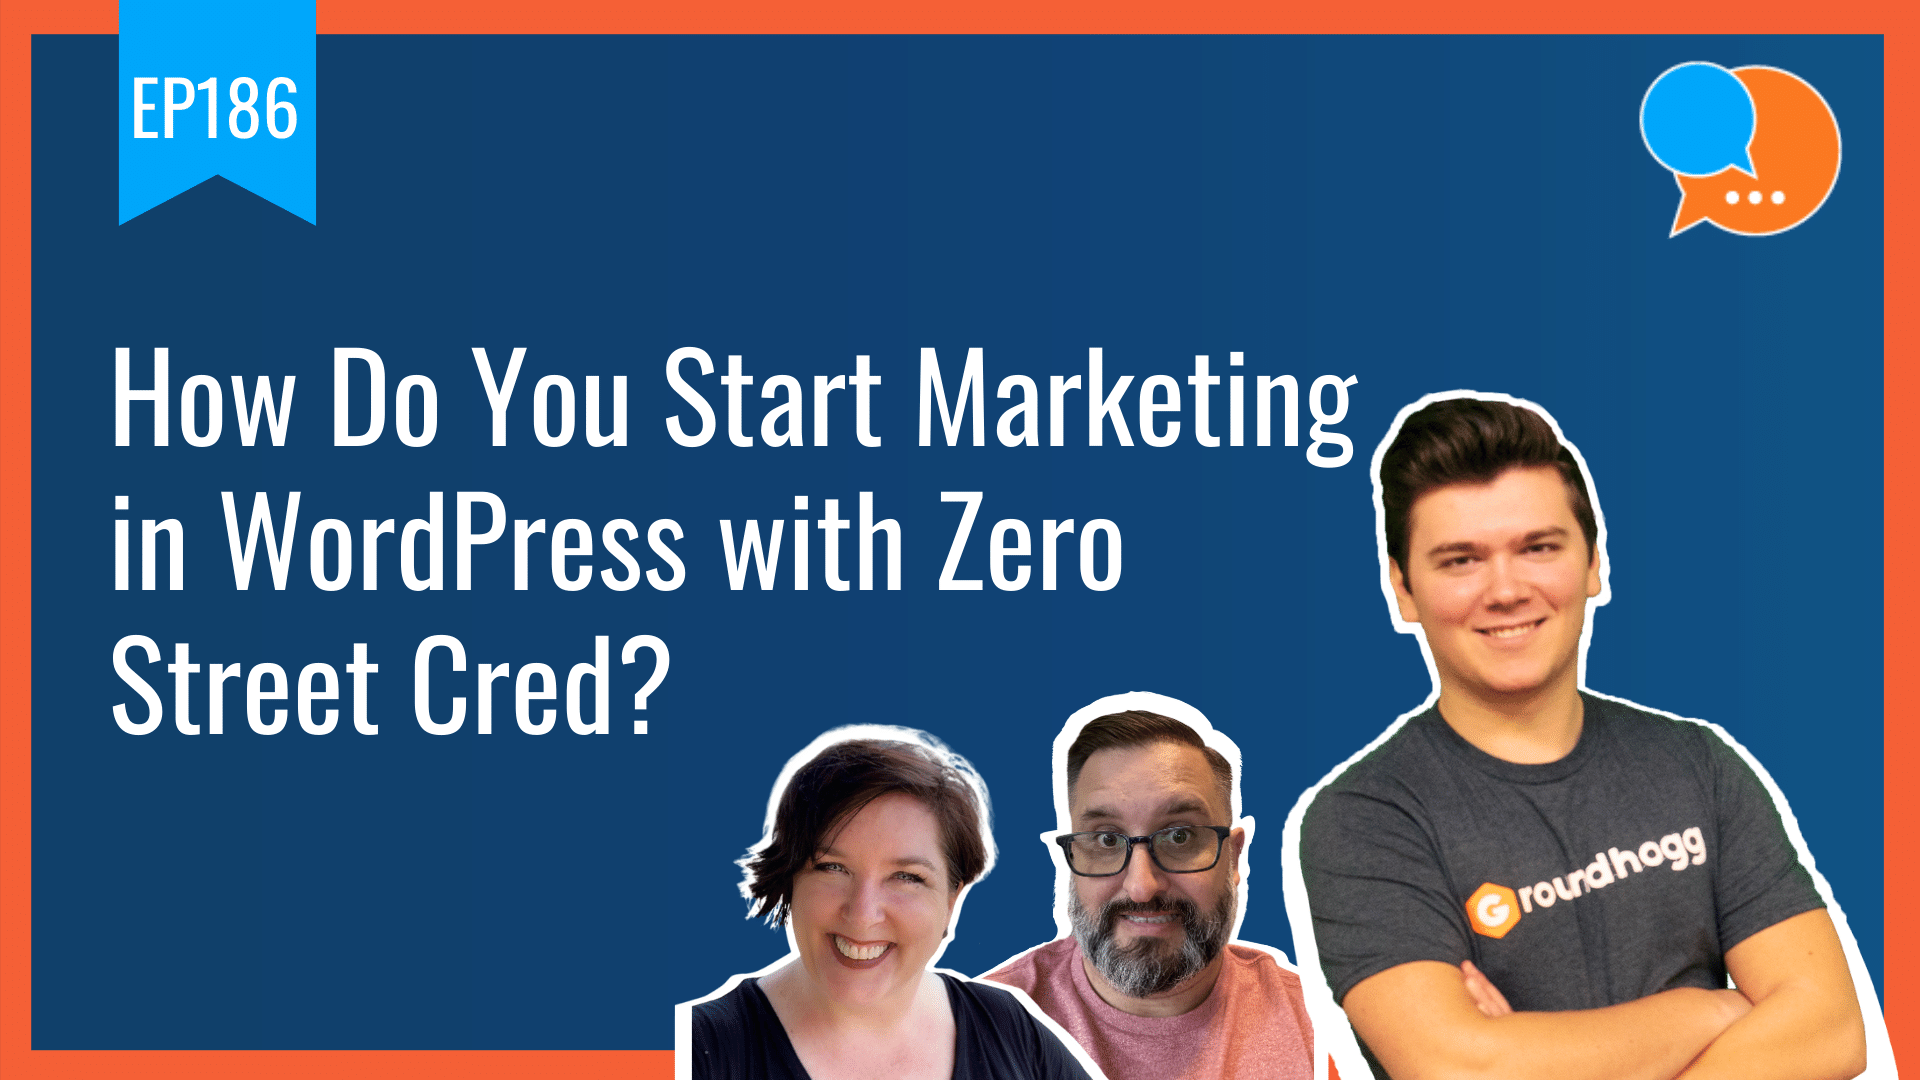 EP186 – How Do You Start Marketing in WordPress with Zero Street Cred?